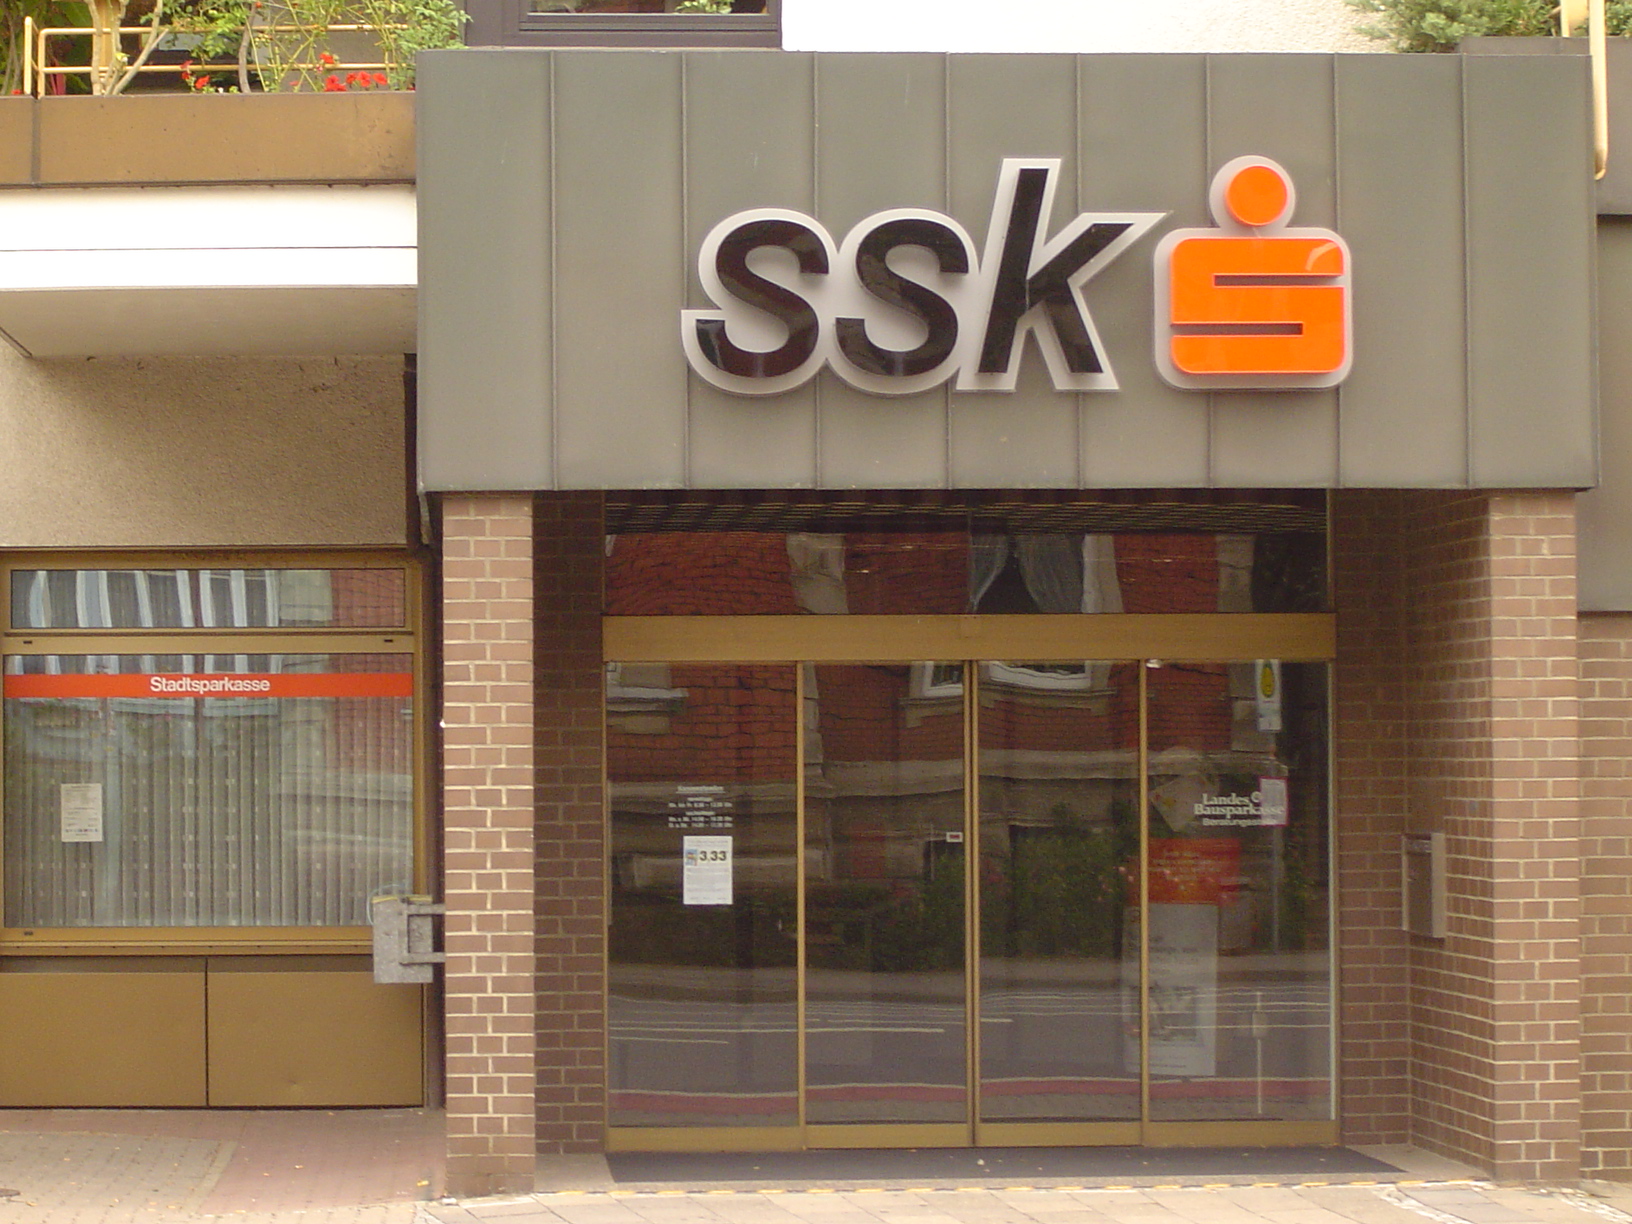 rigoletto store ssk logo shop window stadtsparkasse bank